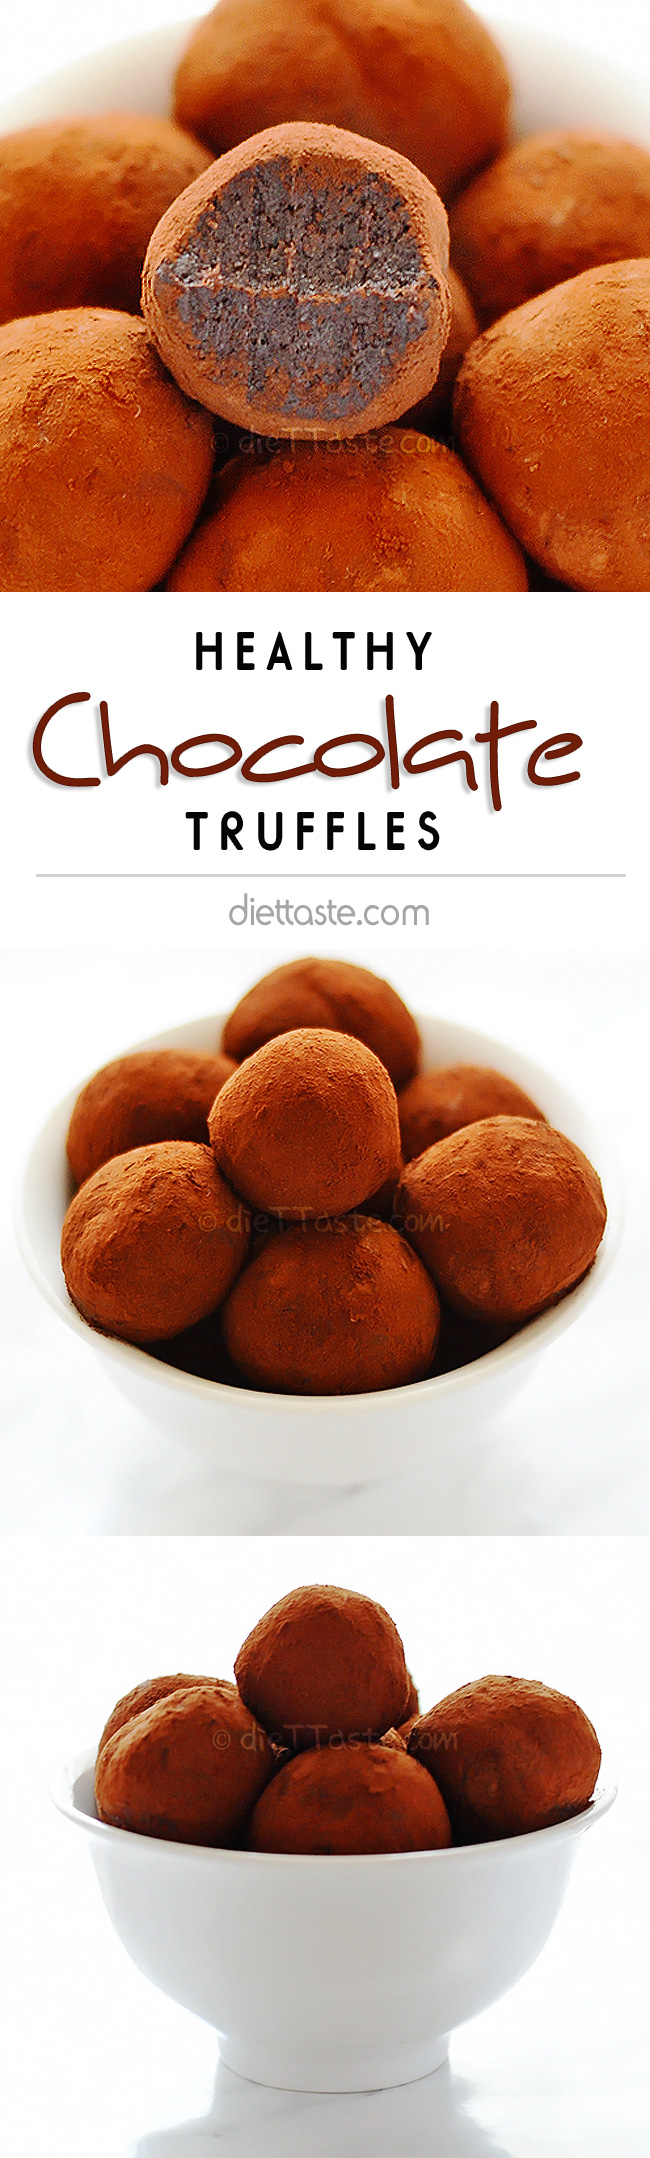 Healthy Chocolate Truffles - diettaste.com